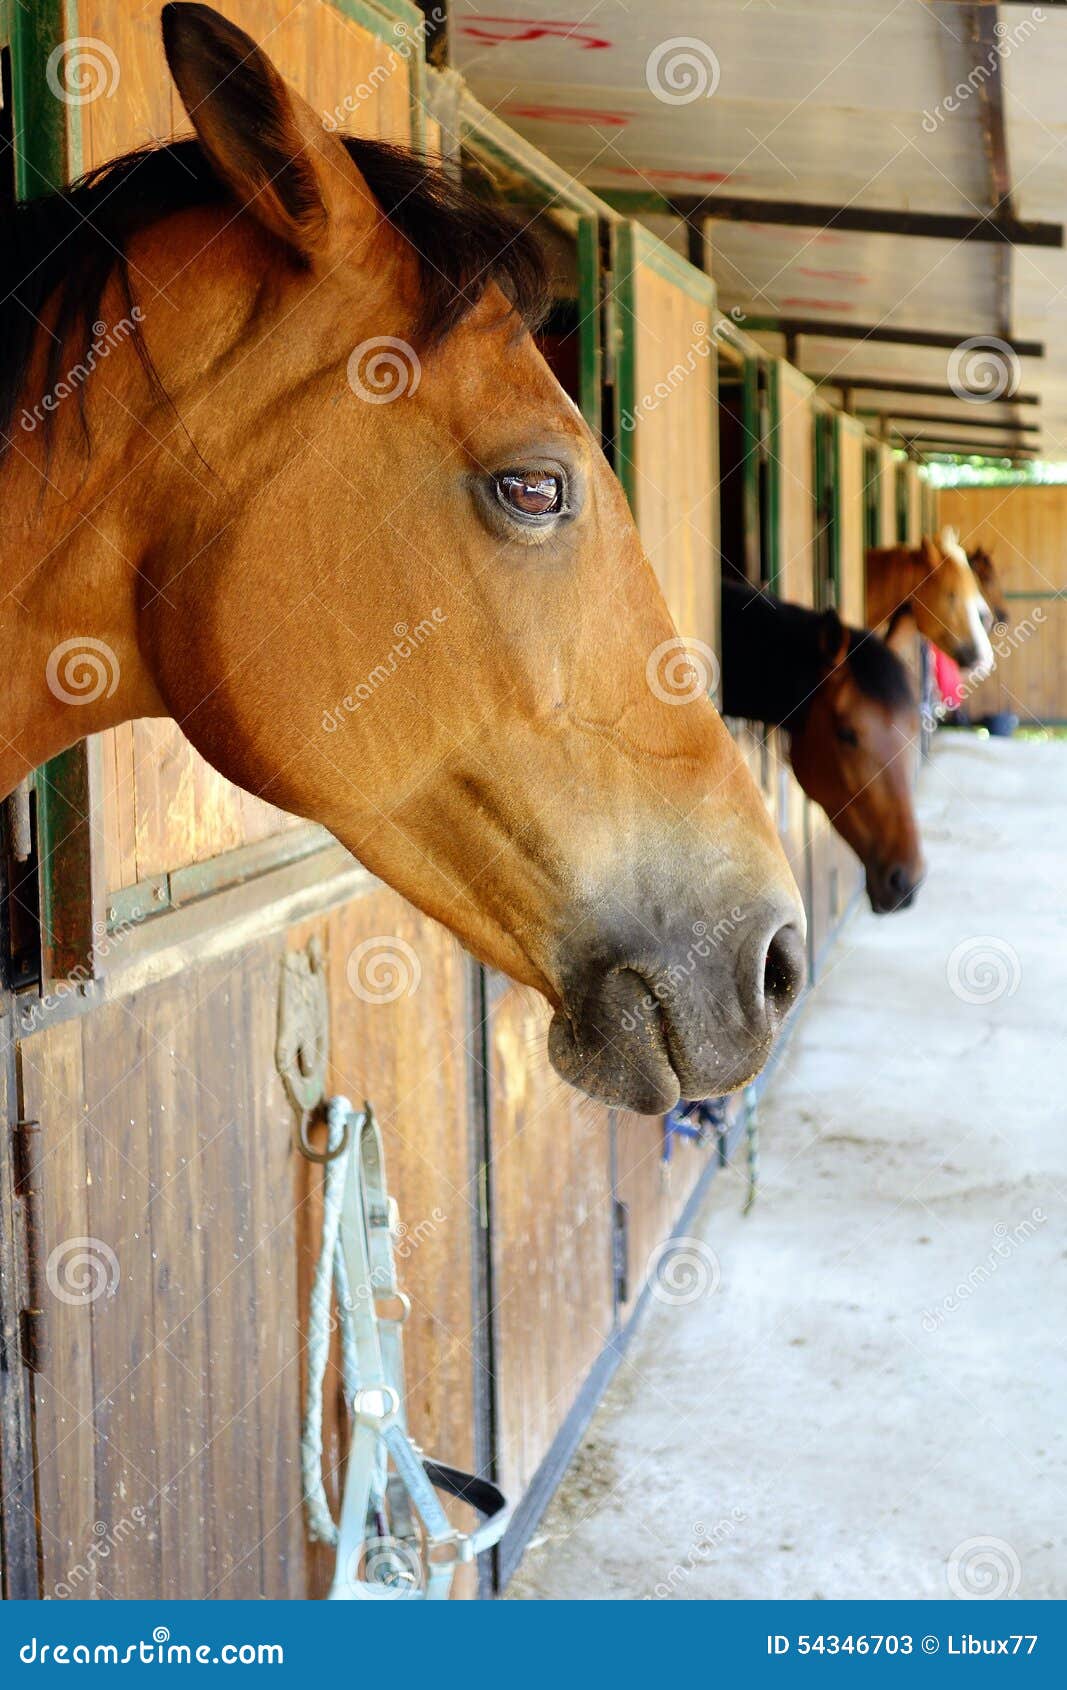 horse brown horses stables closeup